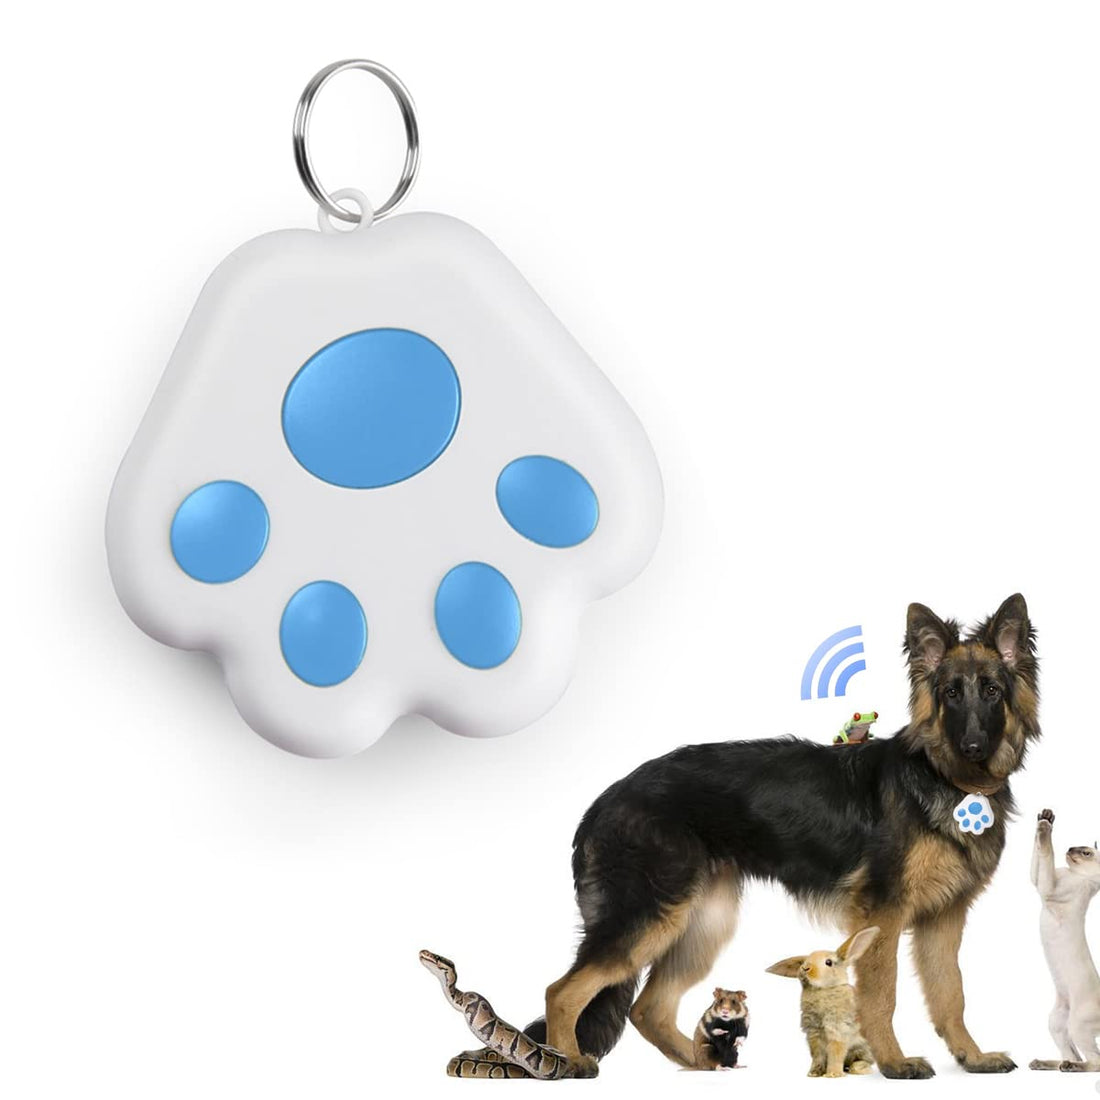 Bluetooth Tracker Key Finder Paw GPS Tracker Wireless Two Way Locator Devices Selfie Accessories Anti-Lost Alarm Wallet Key Luggage Child Pet Finder Mini Smart Tracker (Sky Blue, PAW)